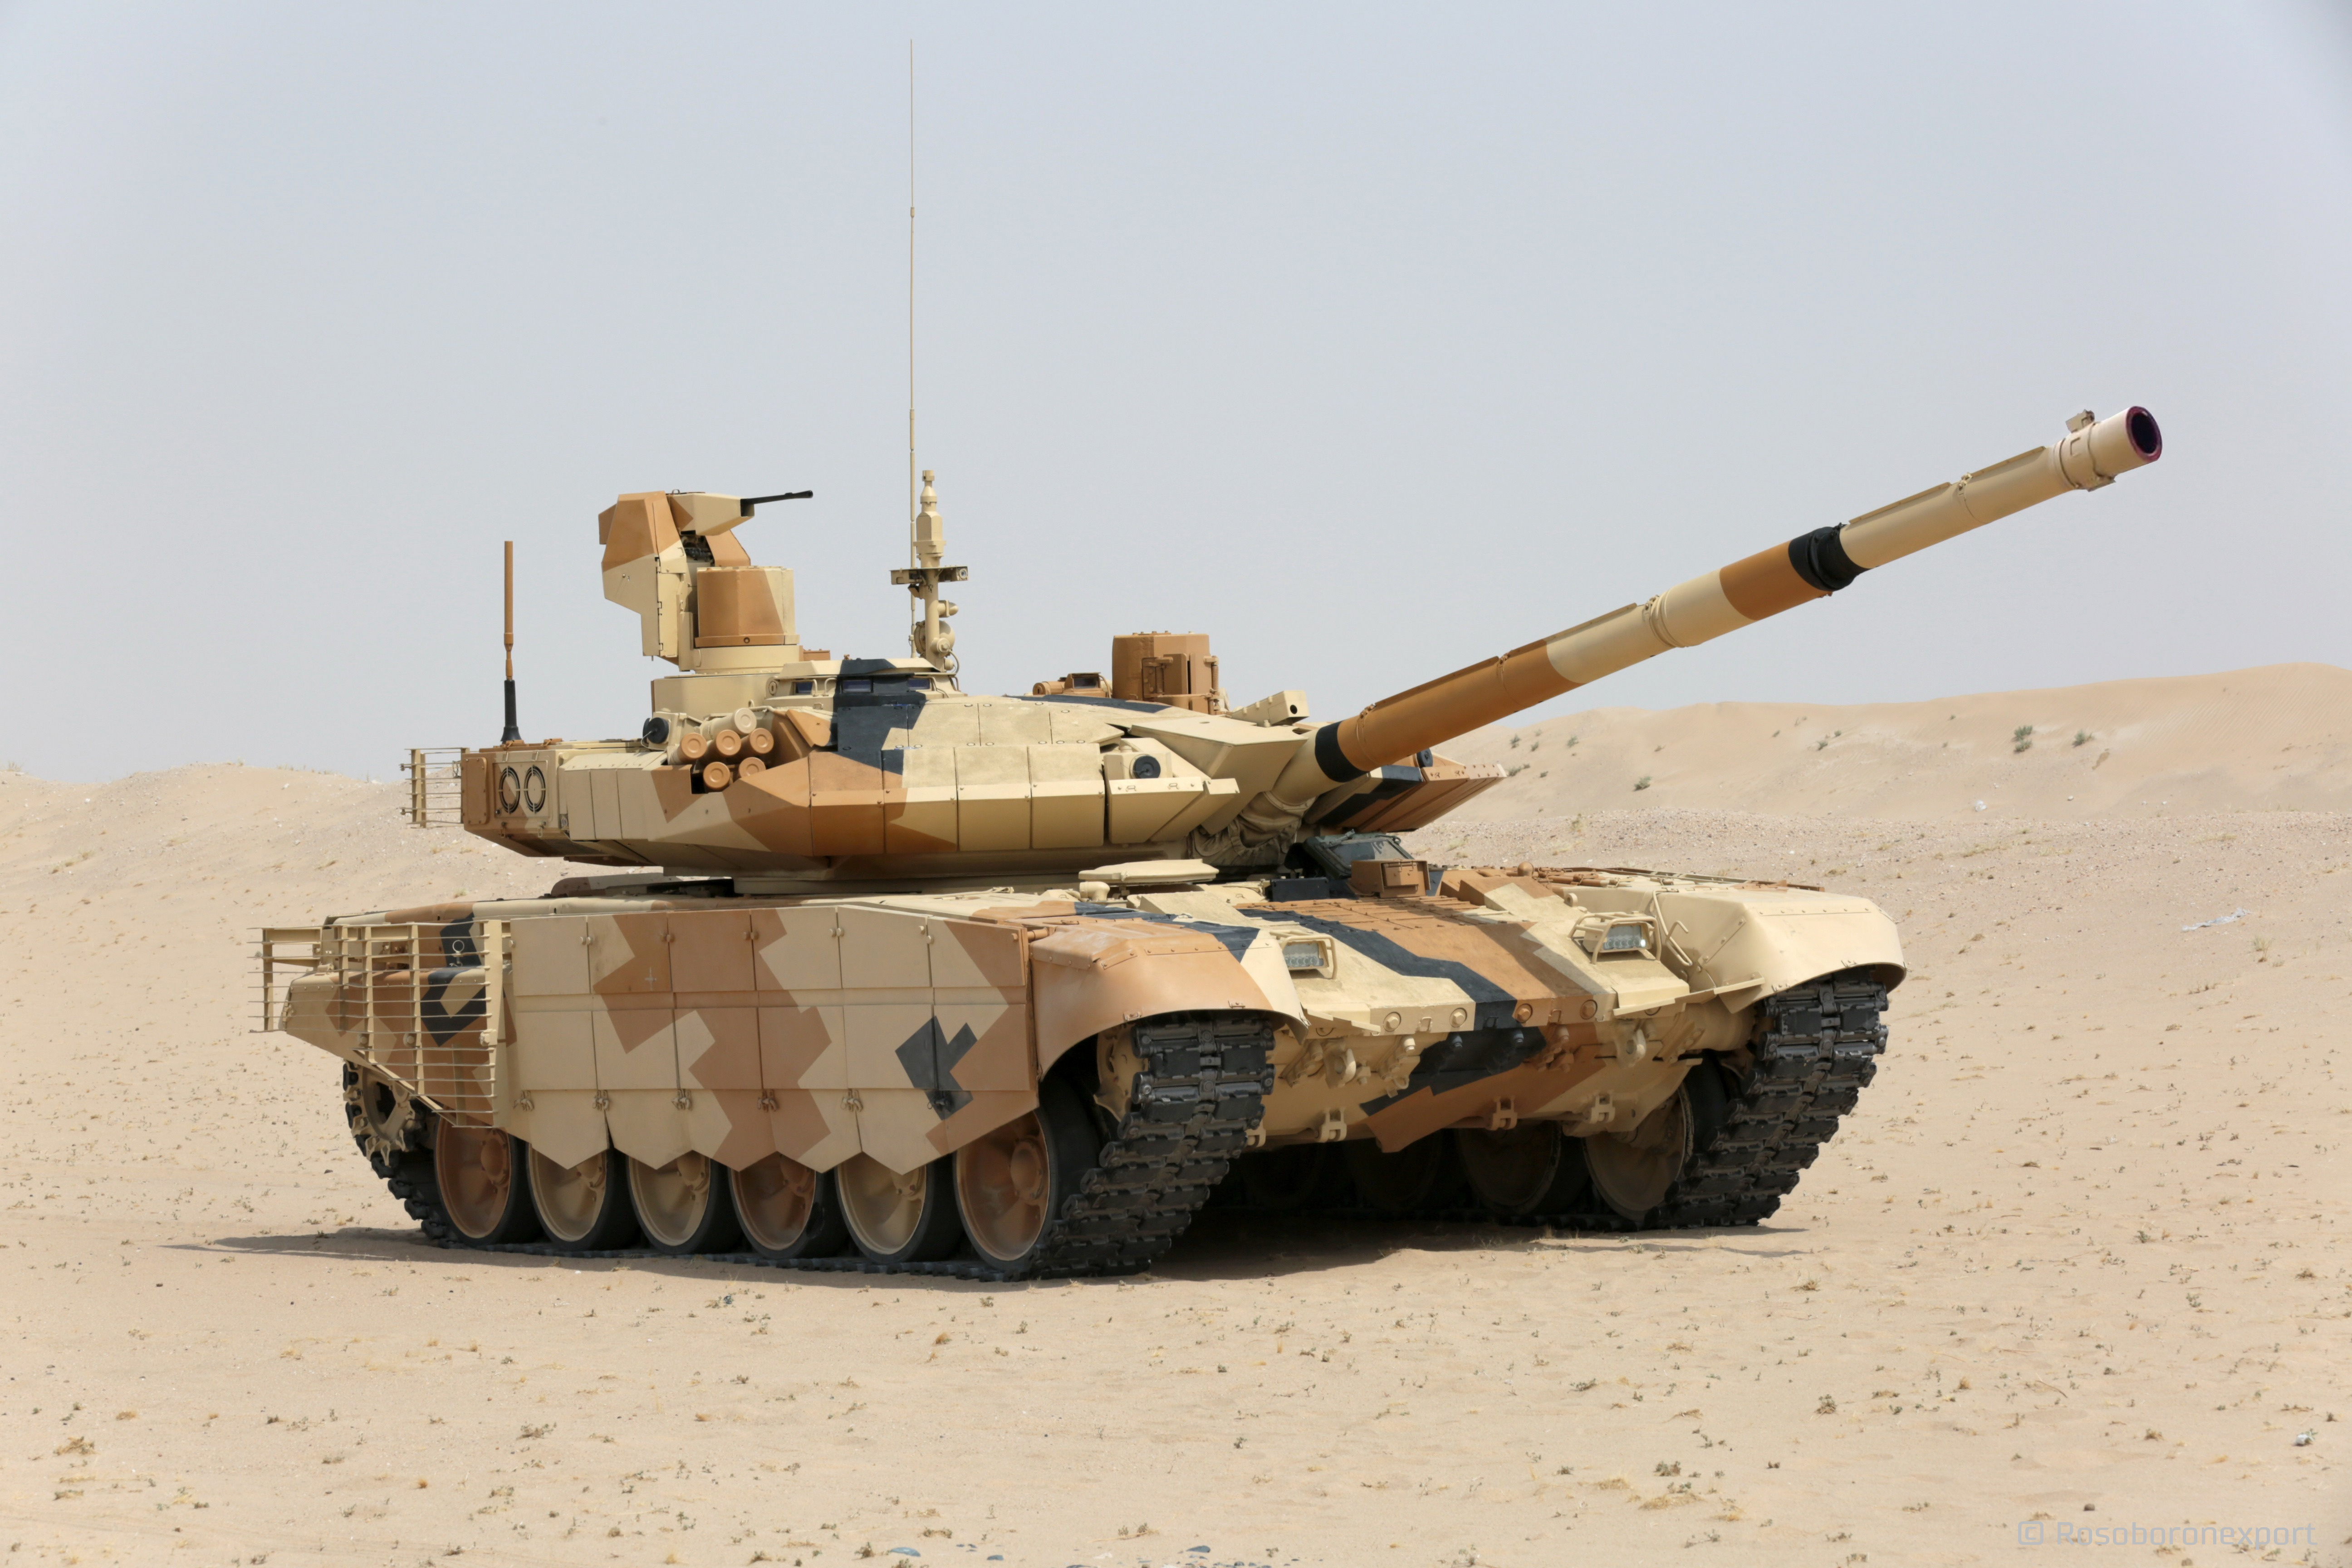 The MBT-70 Main Battle Tank Program